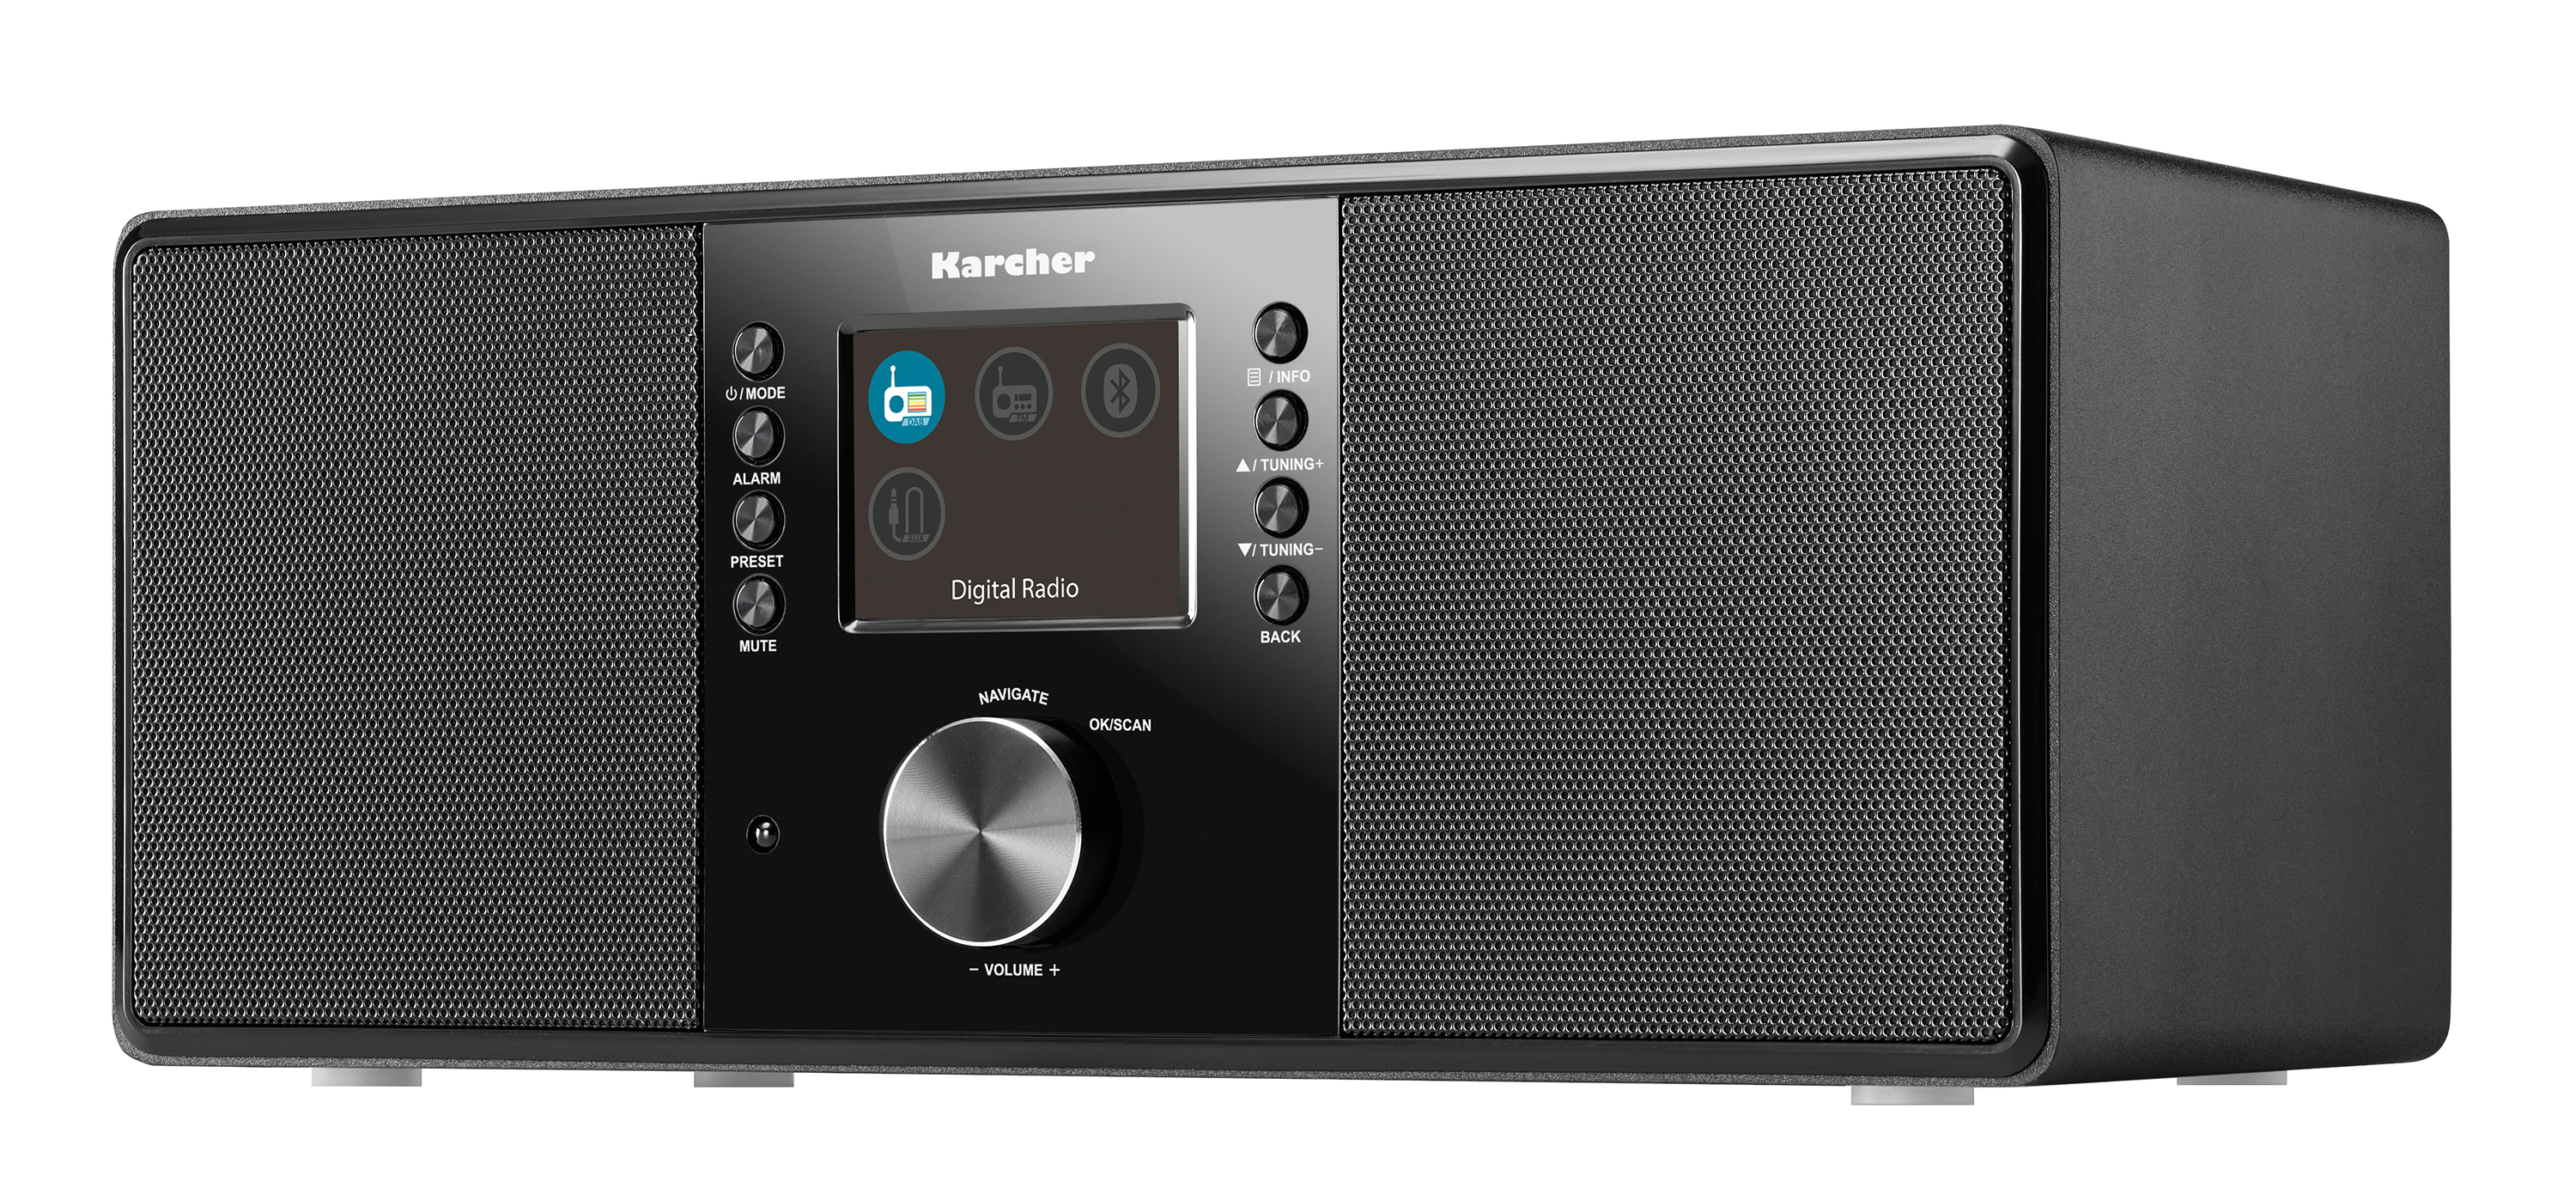 KARCHER DAB 5000+ (FM), Schwarz DAB+, Bluetooth, UKW DAB+, DAB+ Radio